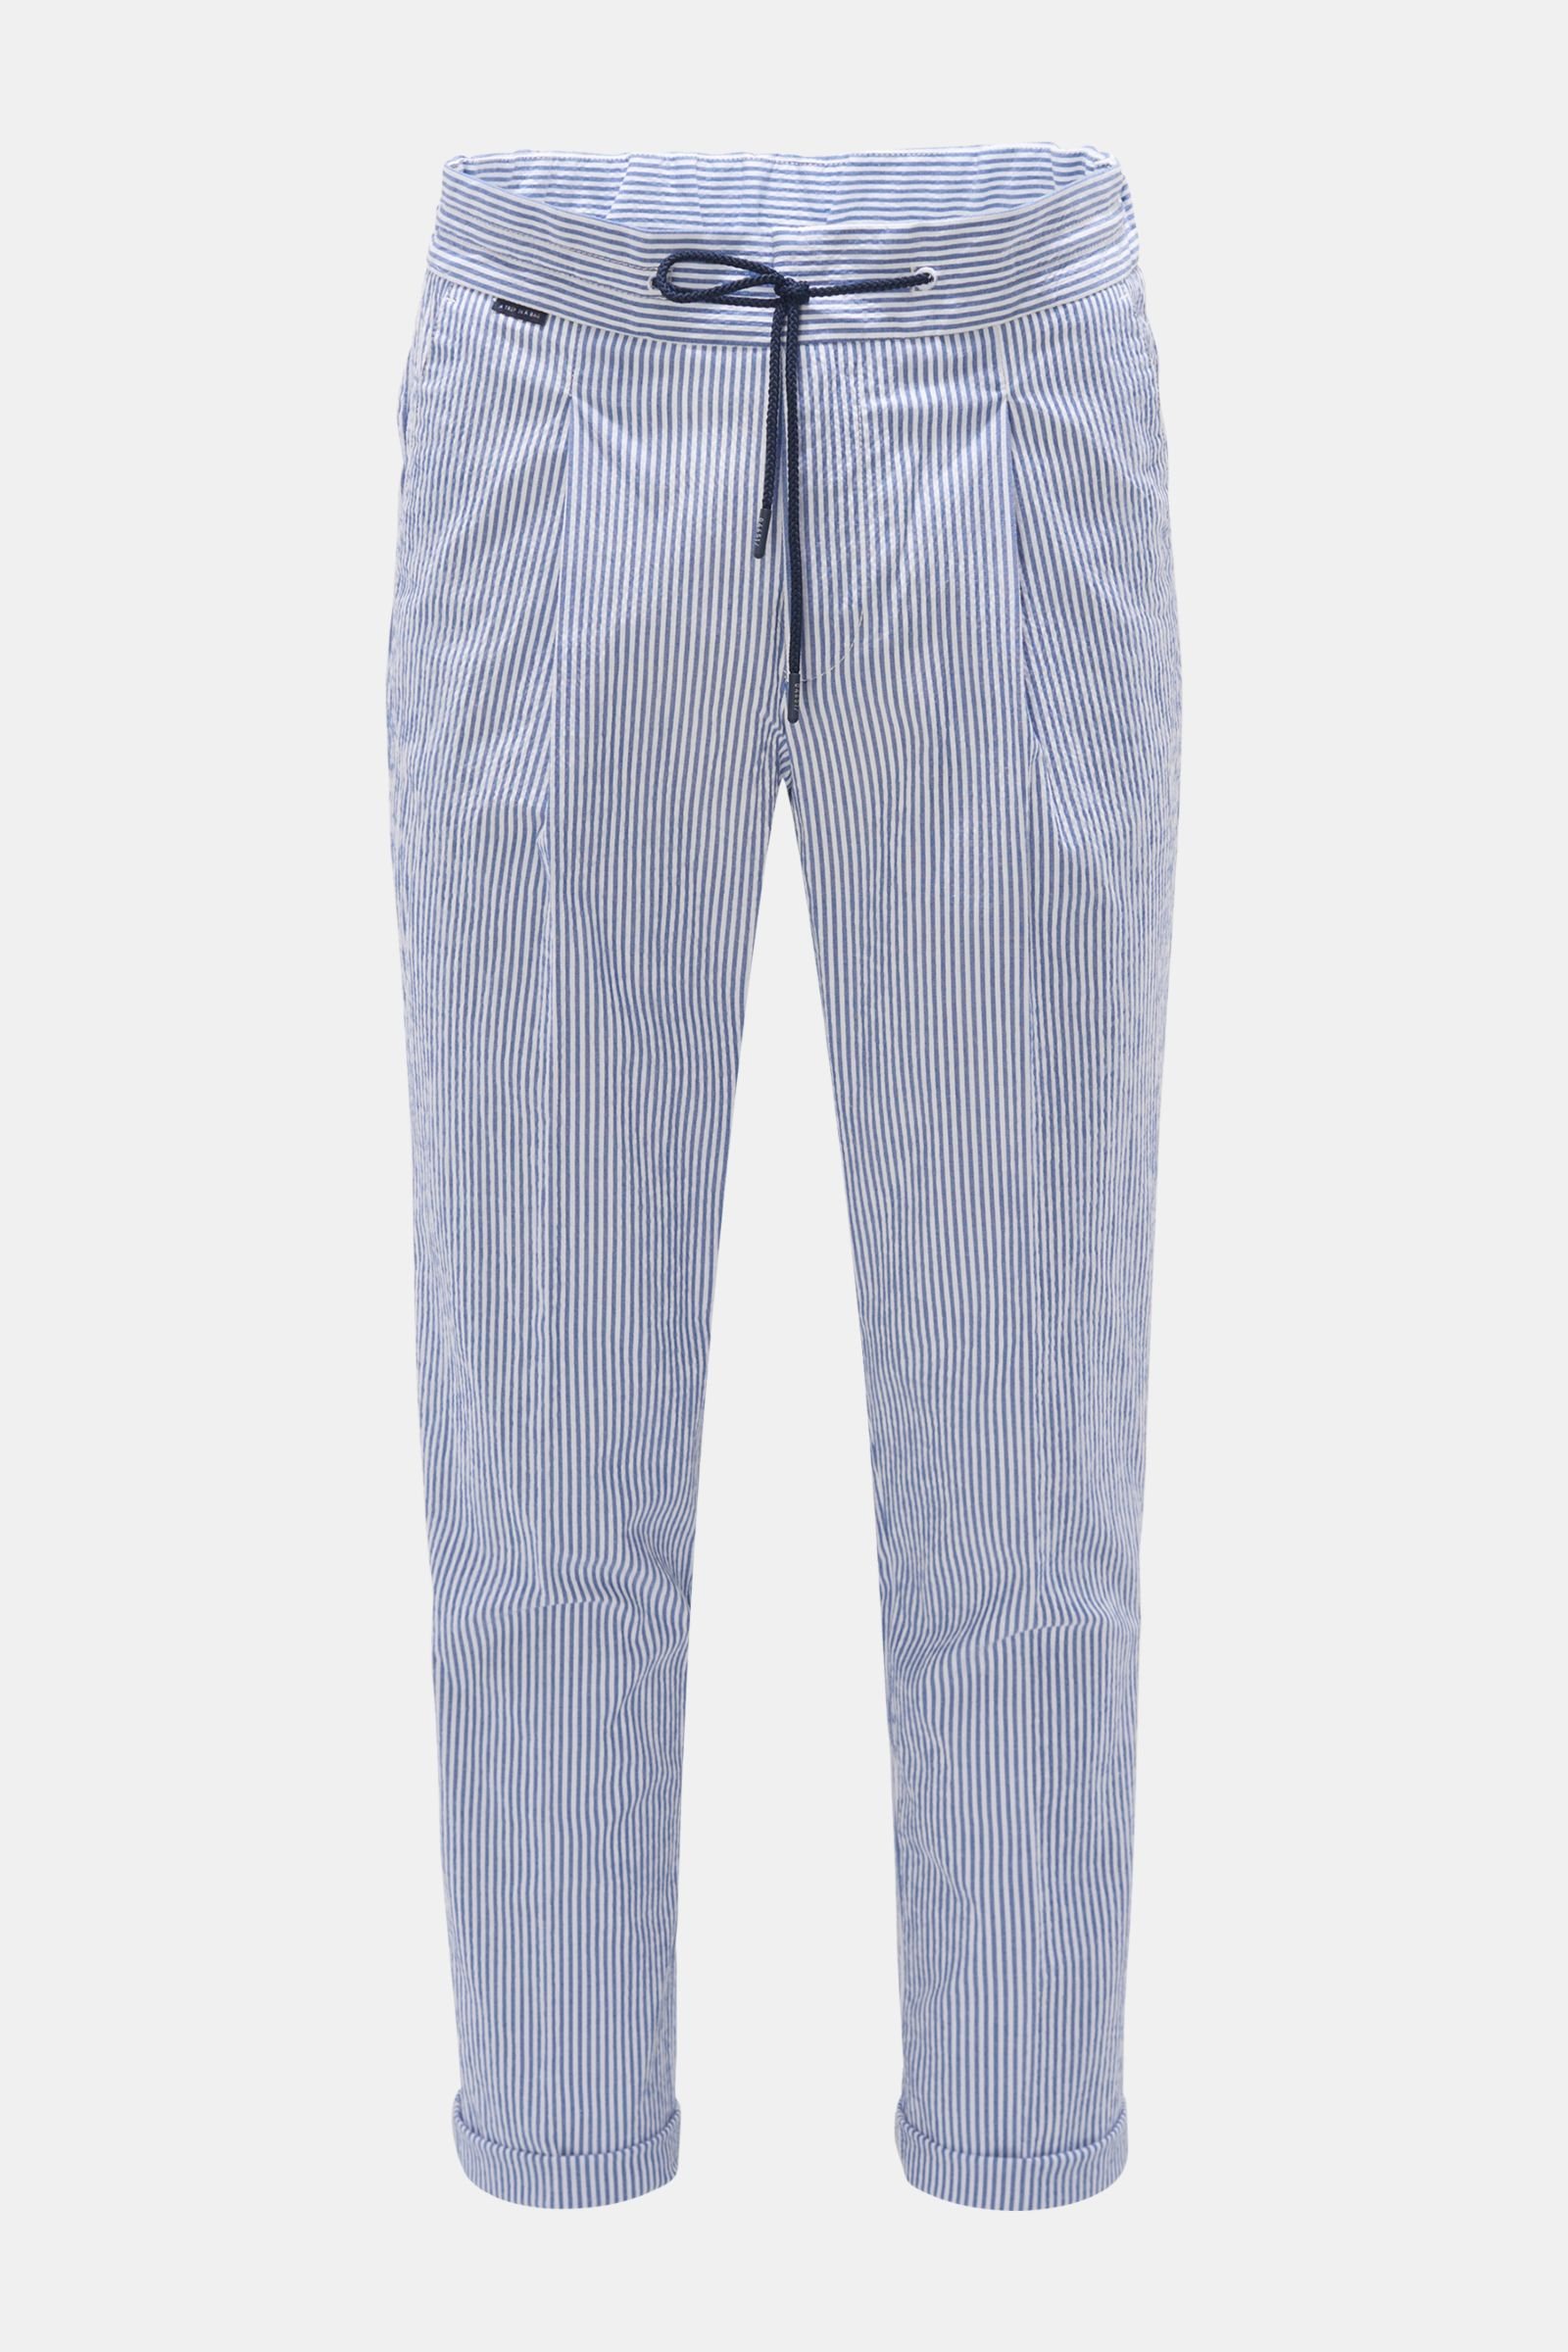 04651/ TRIP IN A BAG seersucker jogger pants 'Seersucker Pleated Pant' grey-blue/white striped | 04651/